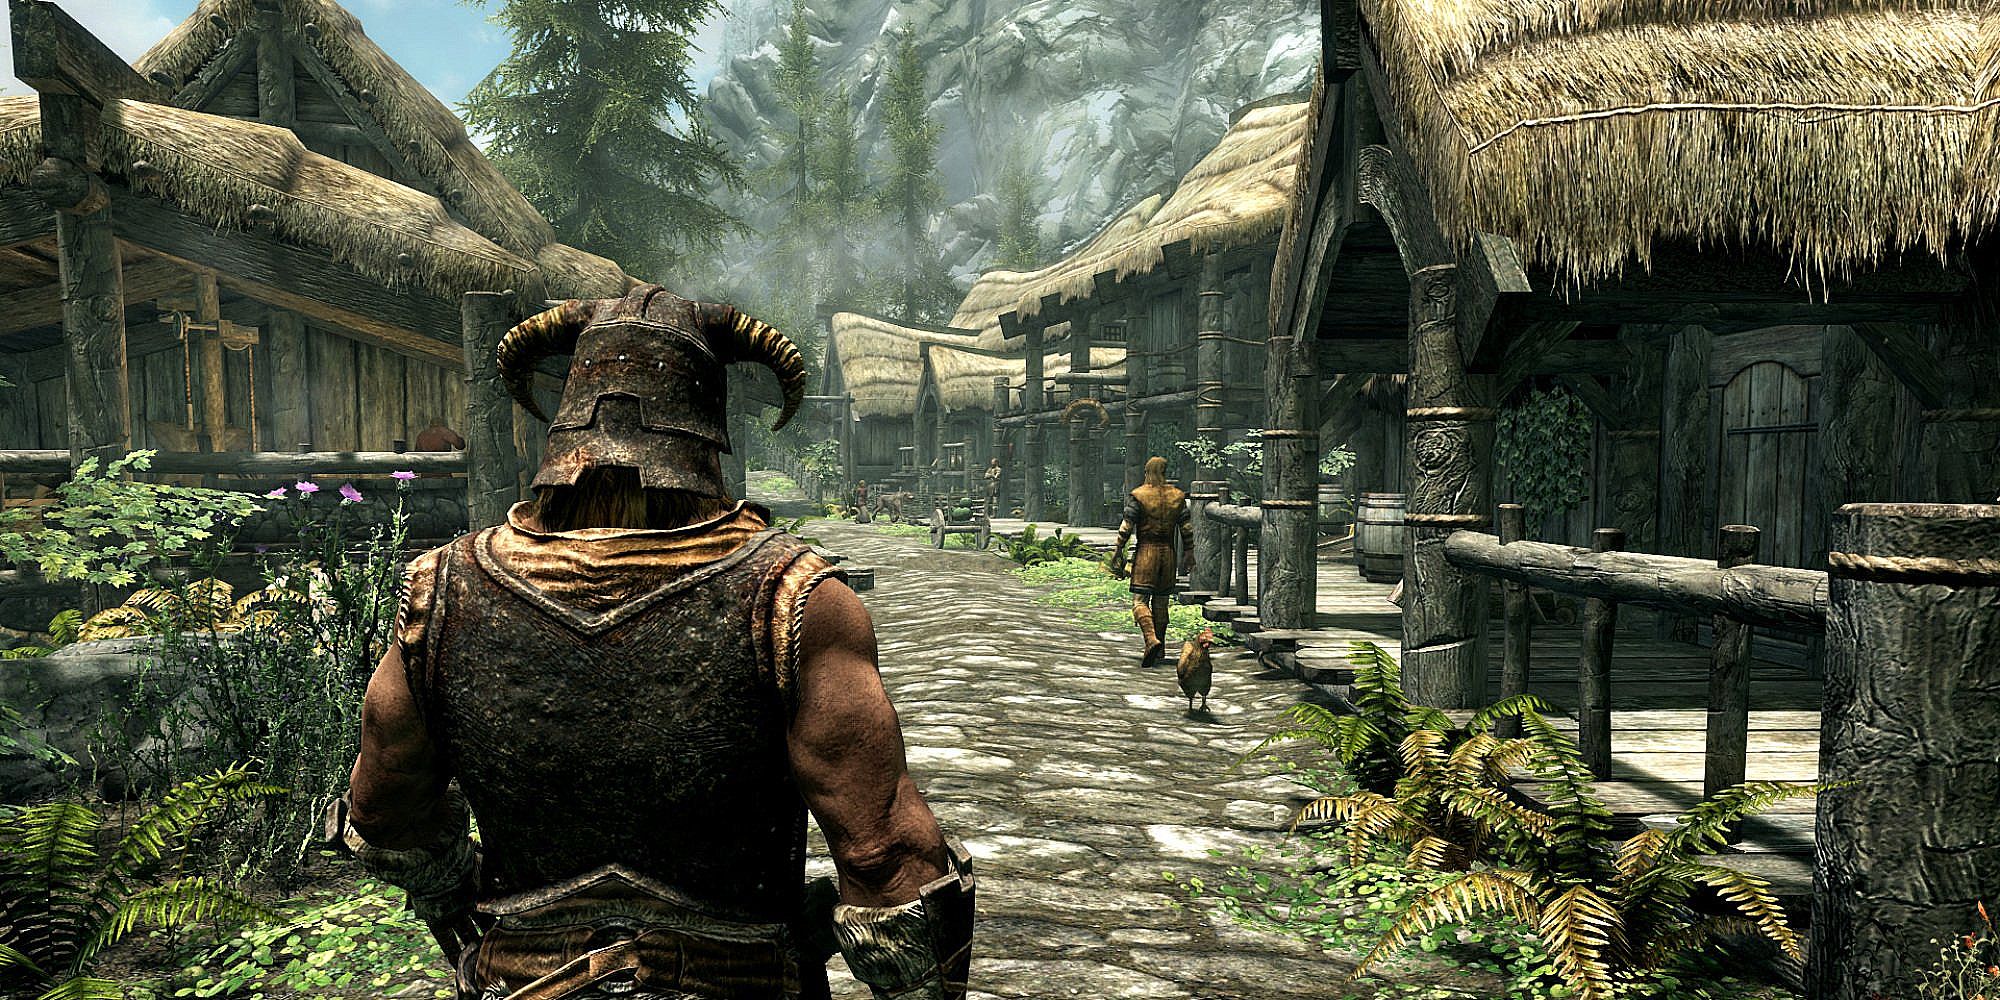 The Dragonborn walks through the village of Riverwood in Skyrim